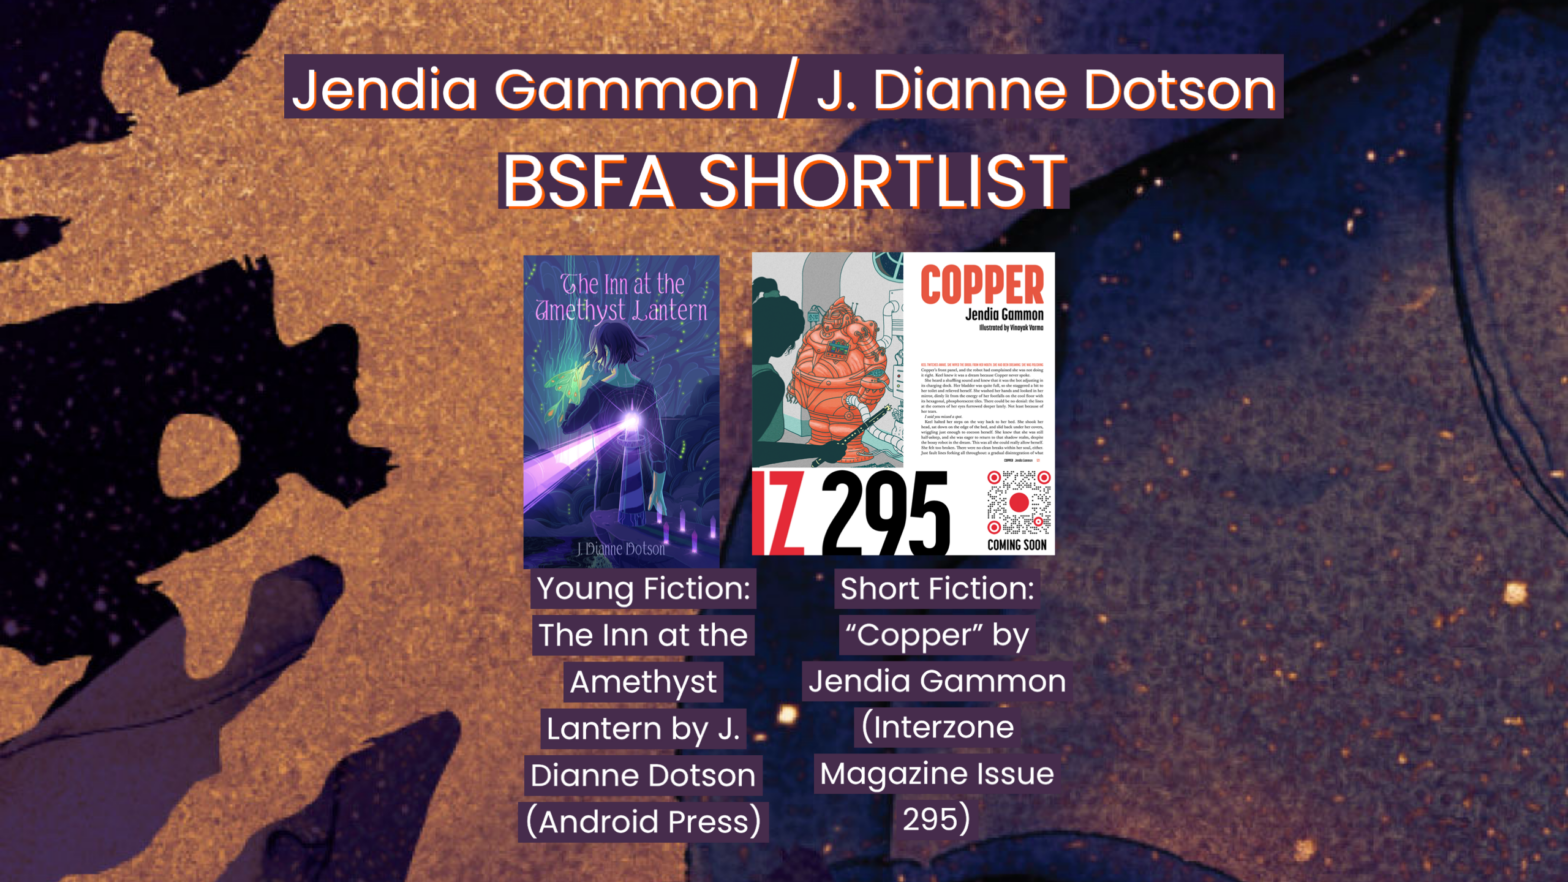 BSFA Awards Shortlisted Twice!